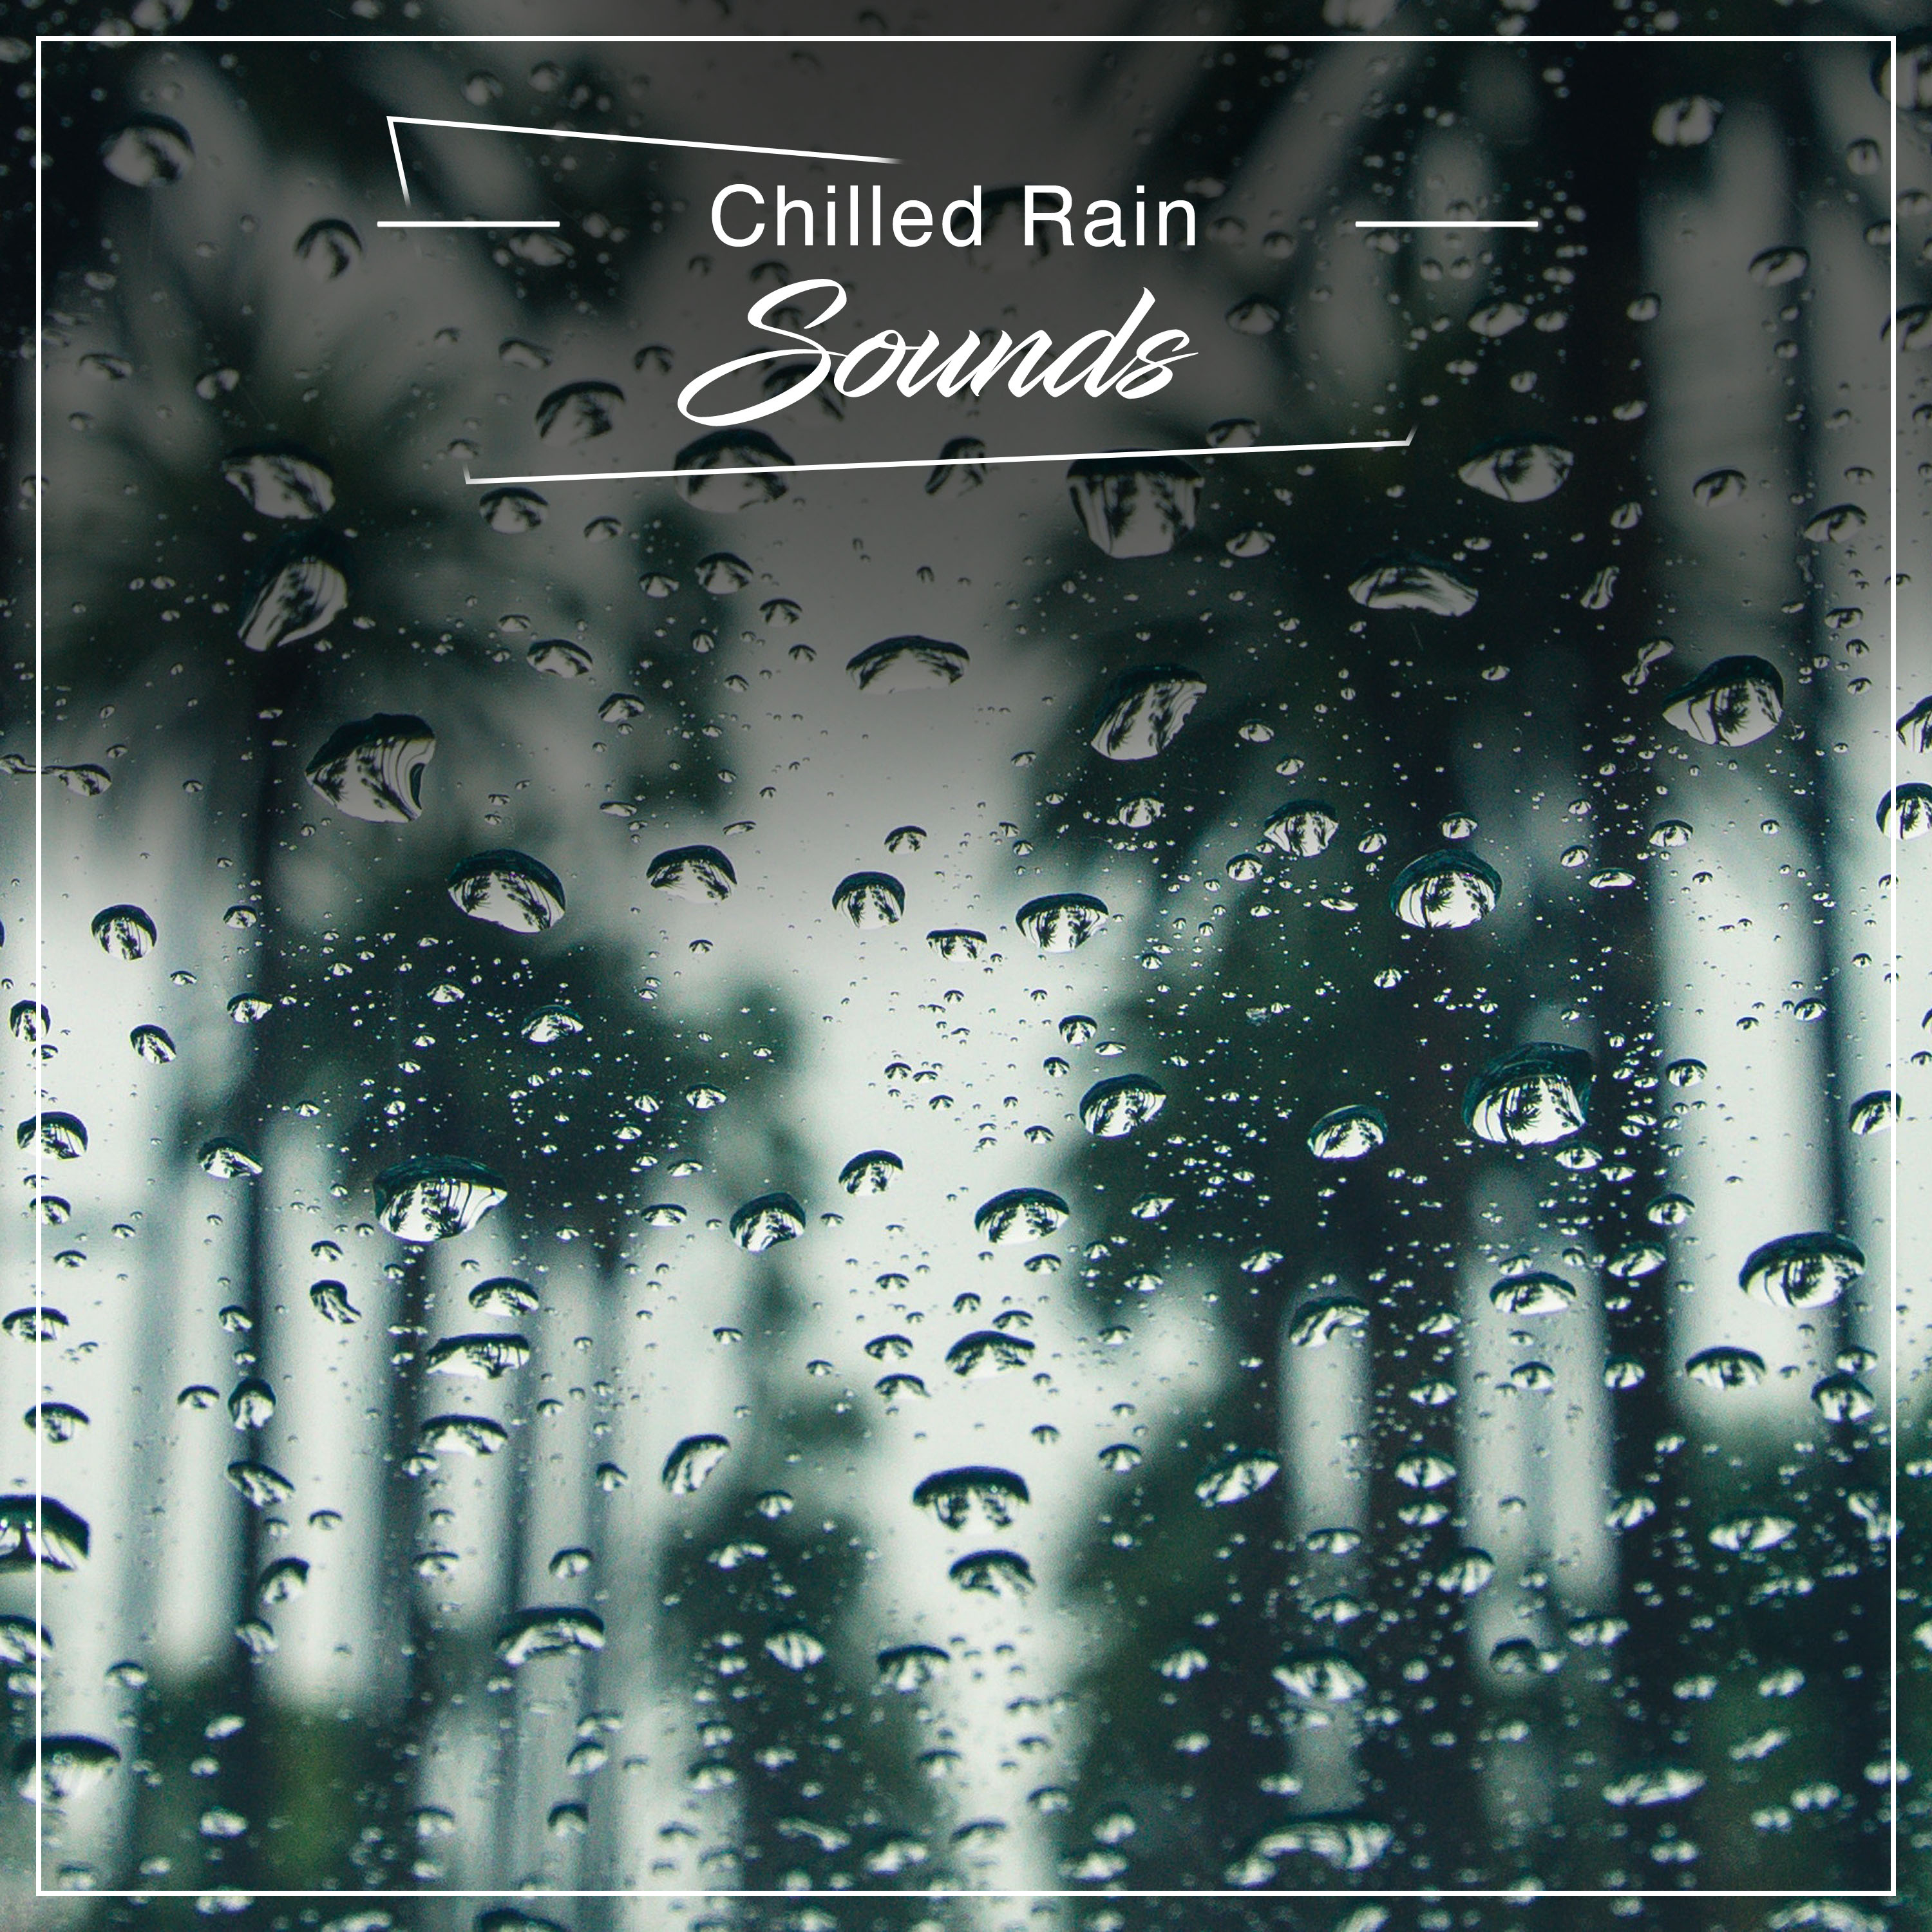 14 Chilled Rain Sounds for Enhanced Wellness